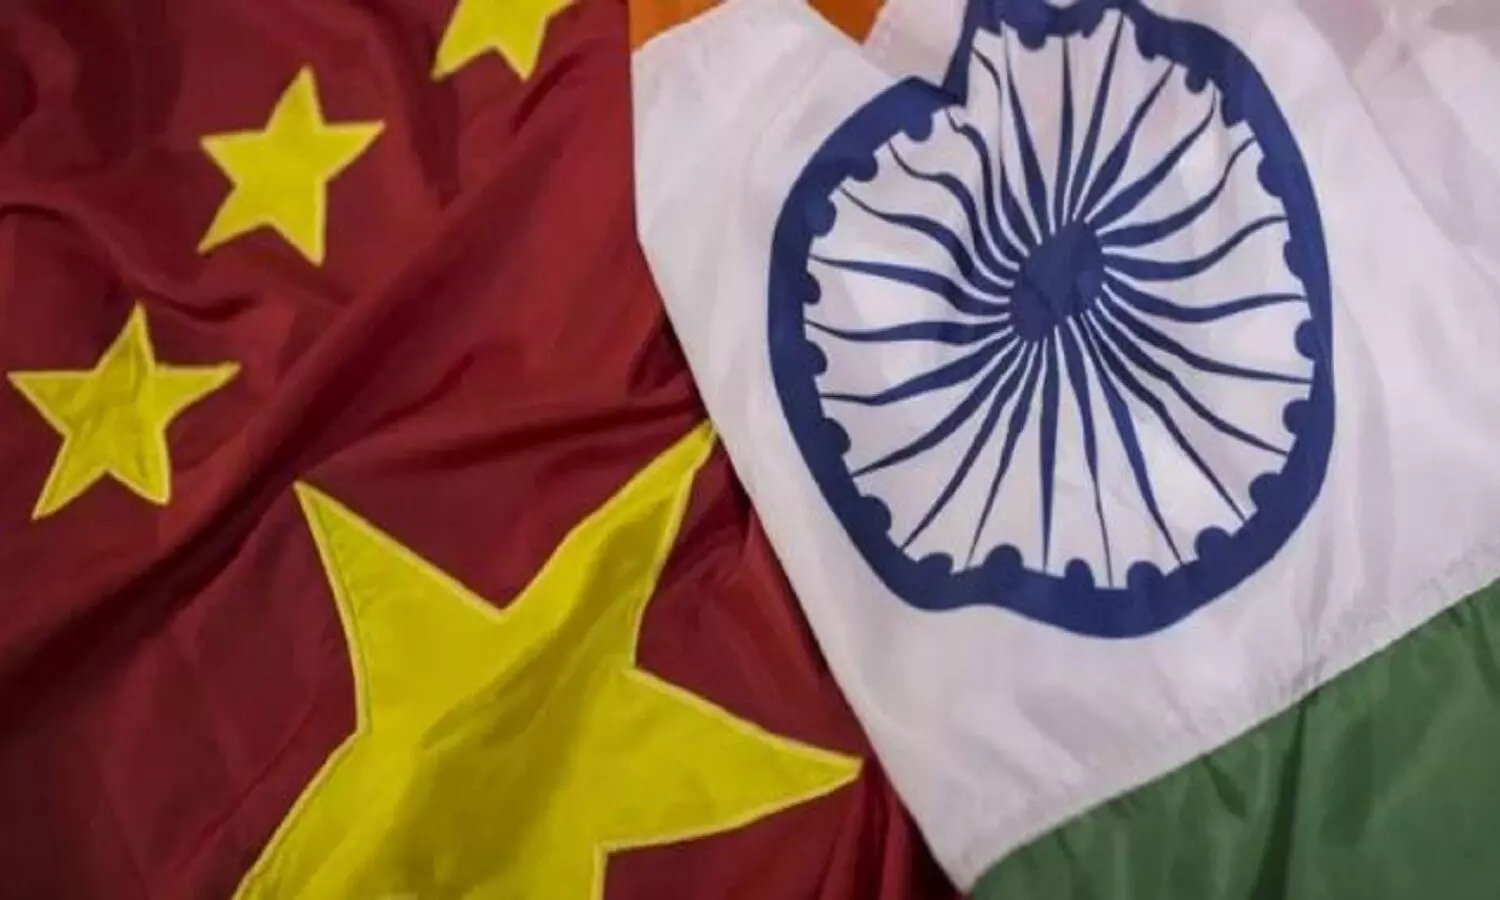 India-China